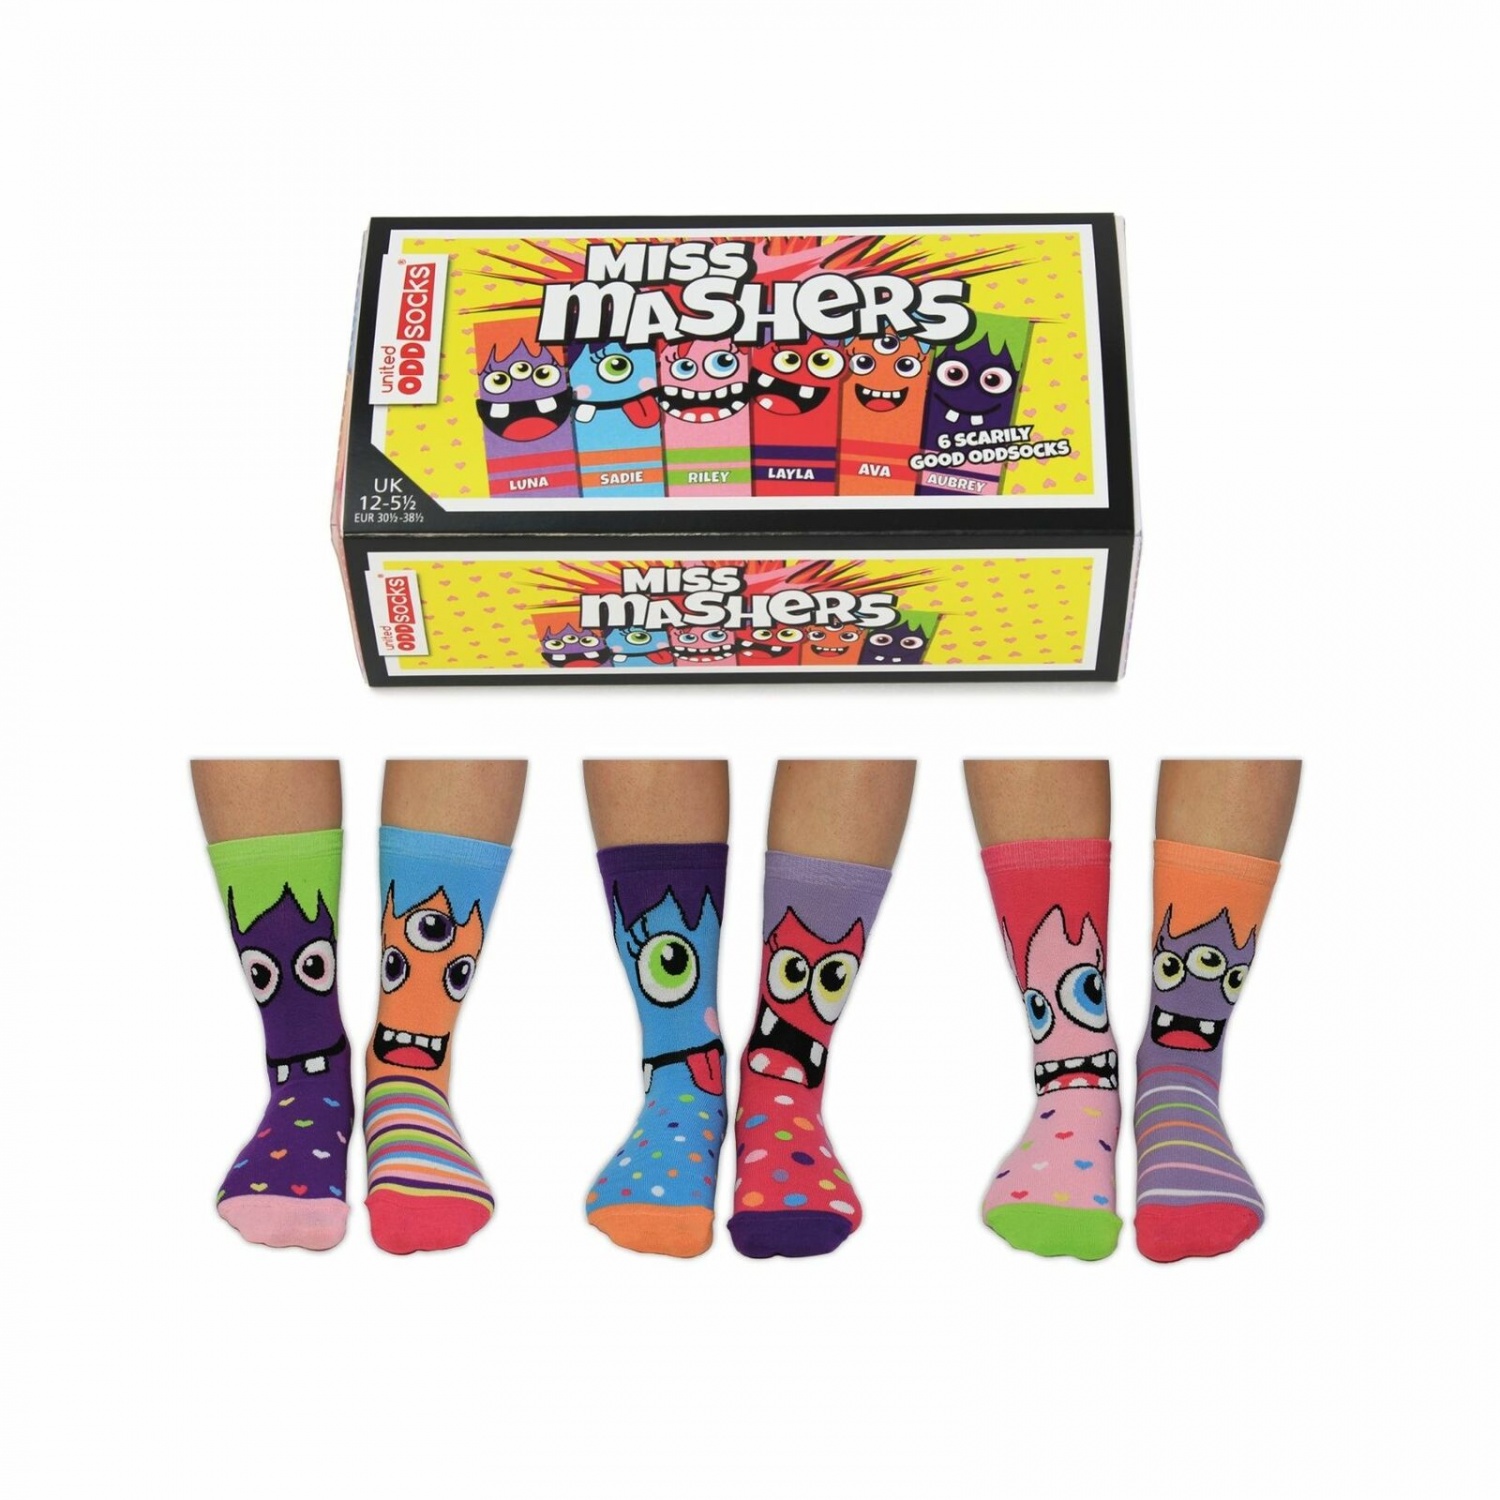 Miss Mashers Novelty Girls Socks from United Oddsocks